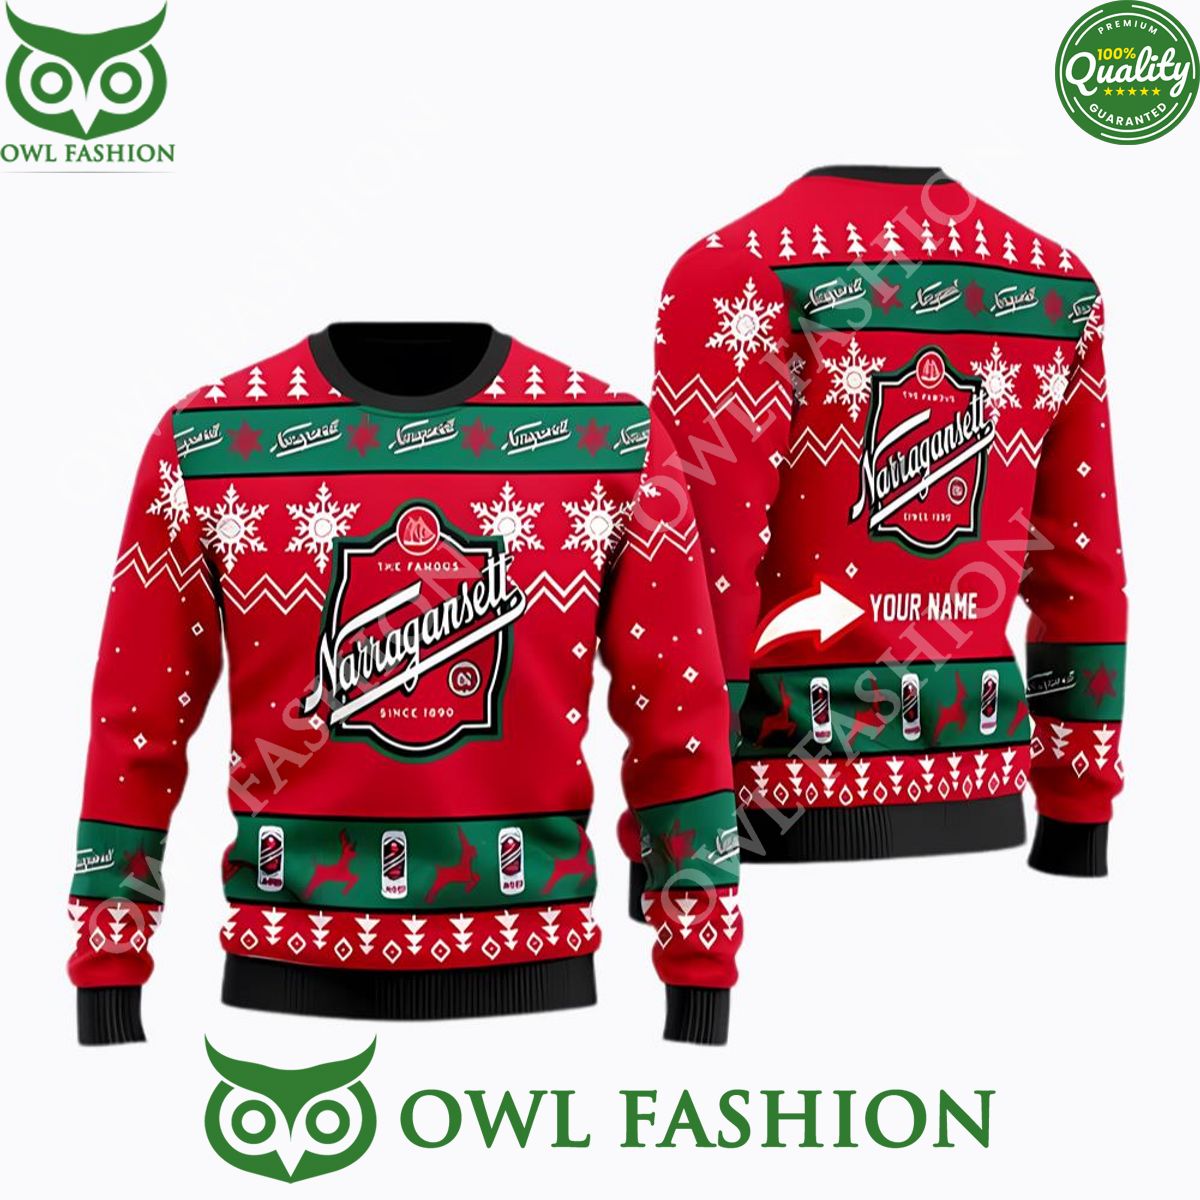 narragansett beer personalized christmas sweater jumpers 1 kWQKx.jpg